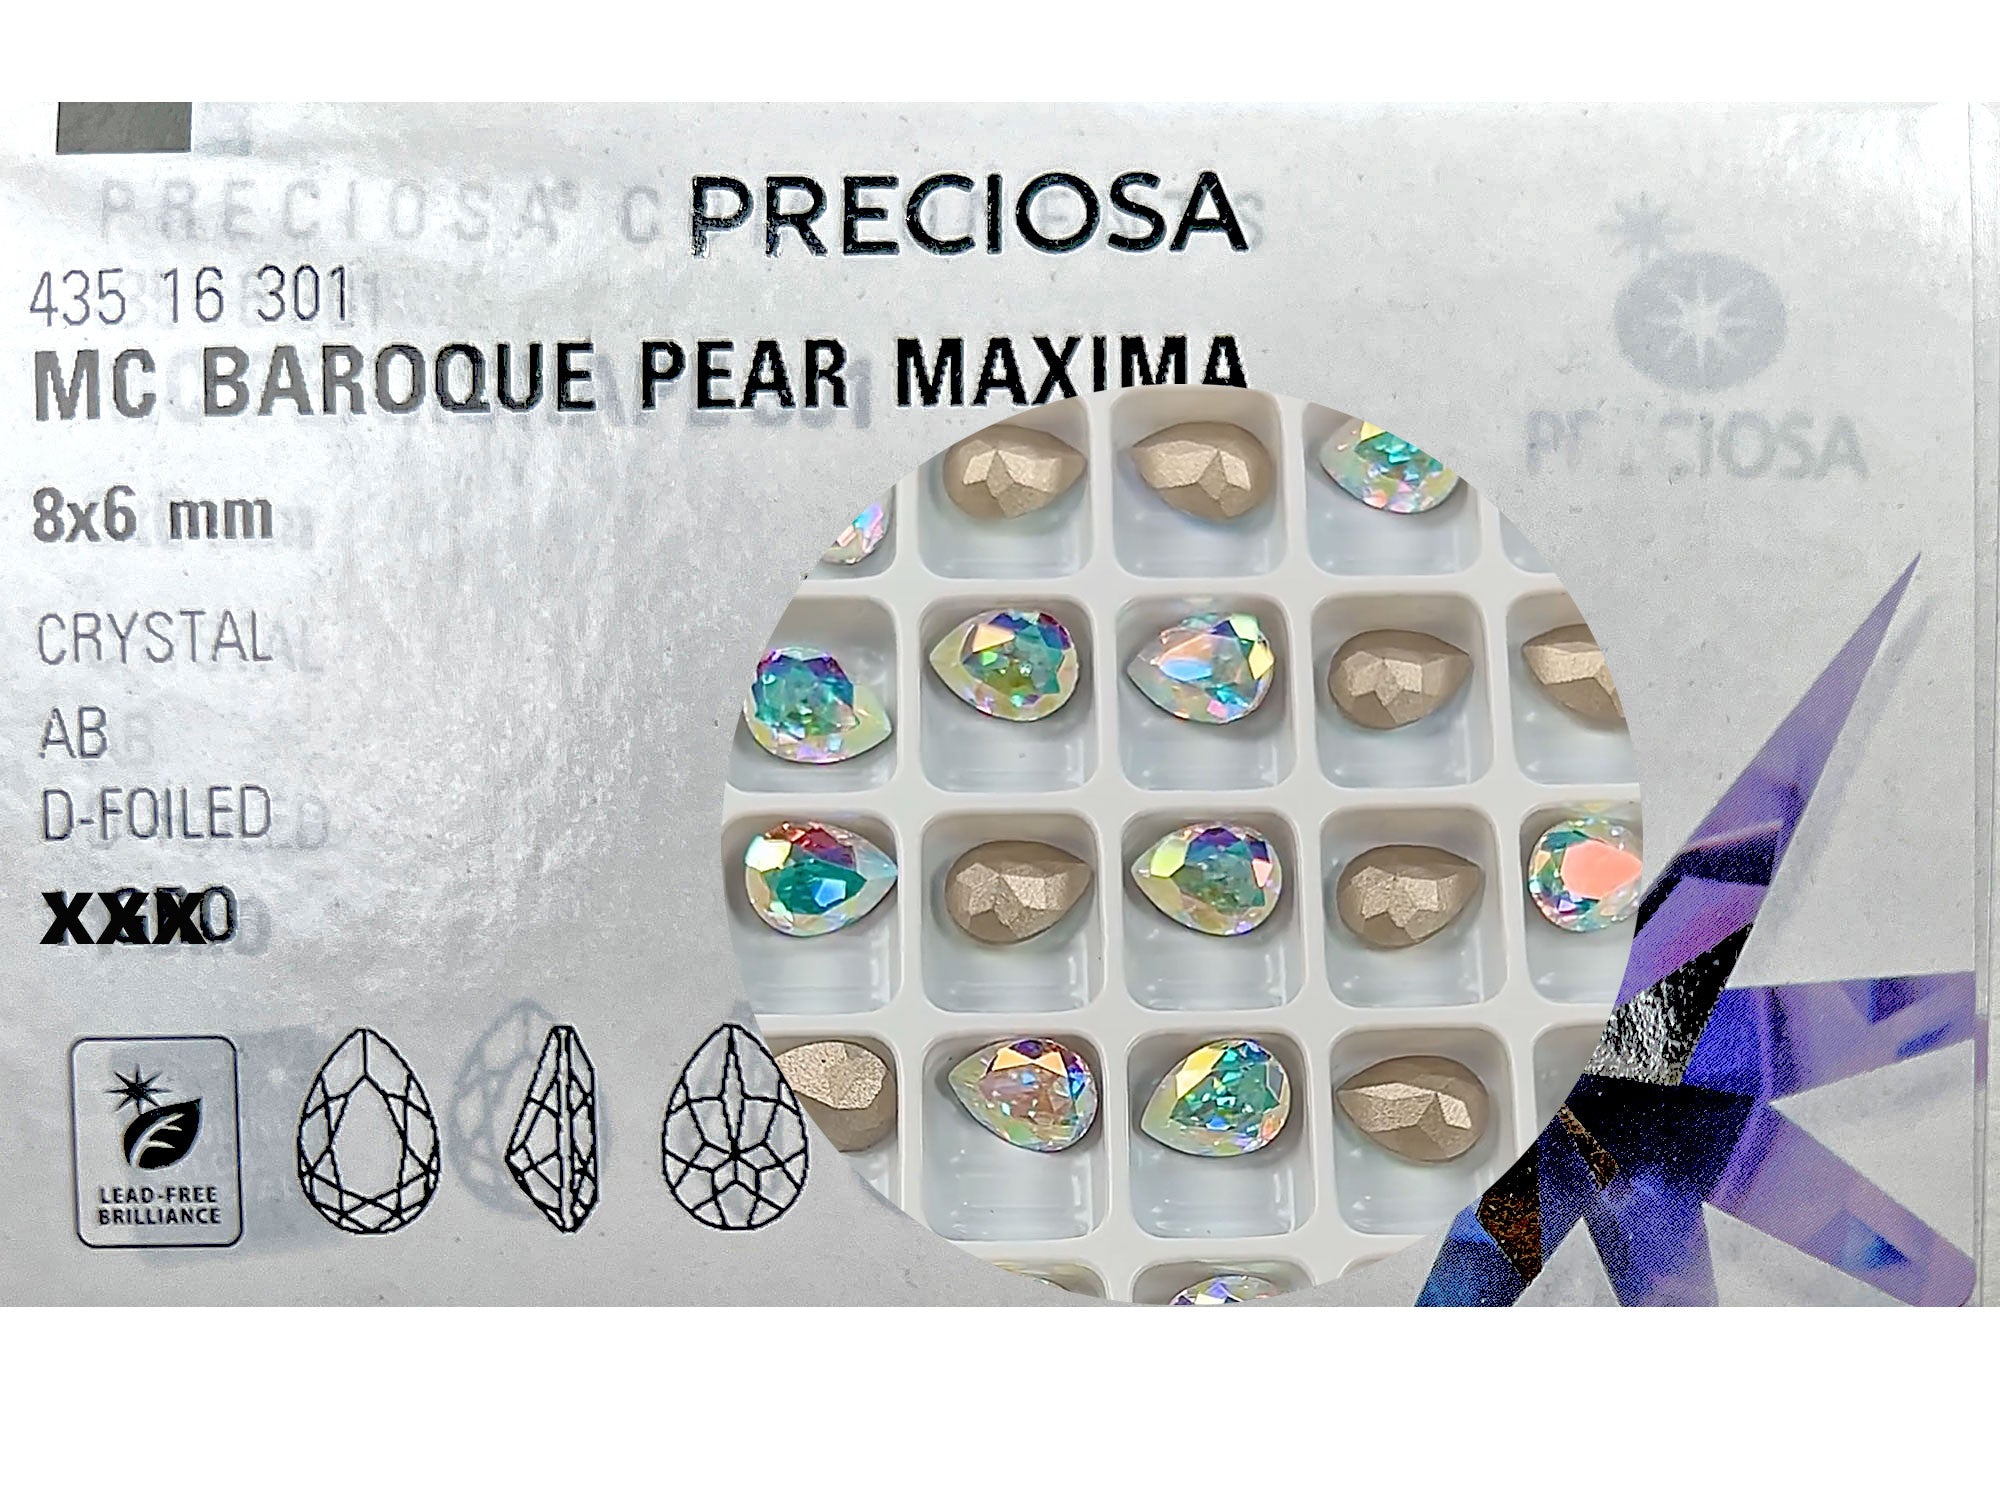 Crystal AB, Preciosa Czech MC Baroque Pearshape Maxima Rhinestones style 435-16-301 in size 8x6mm, 12 pieces, Silver Foiled, P912